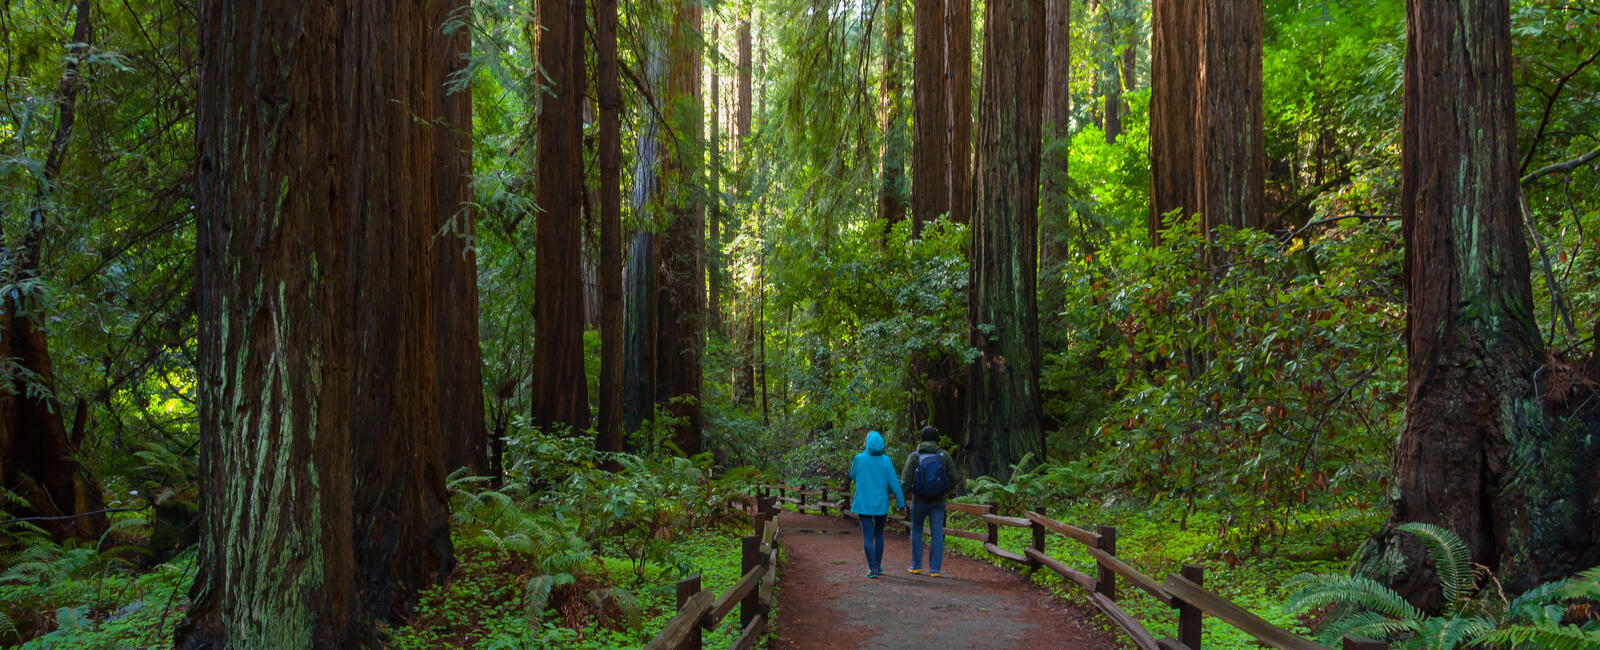 Muir Woods National Monument | Golden Gate National Parks Conservancy